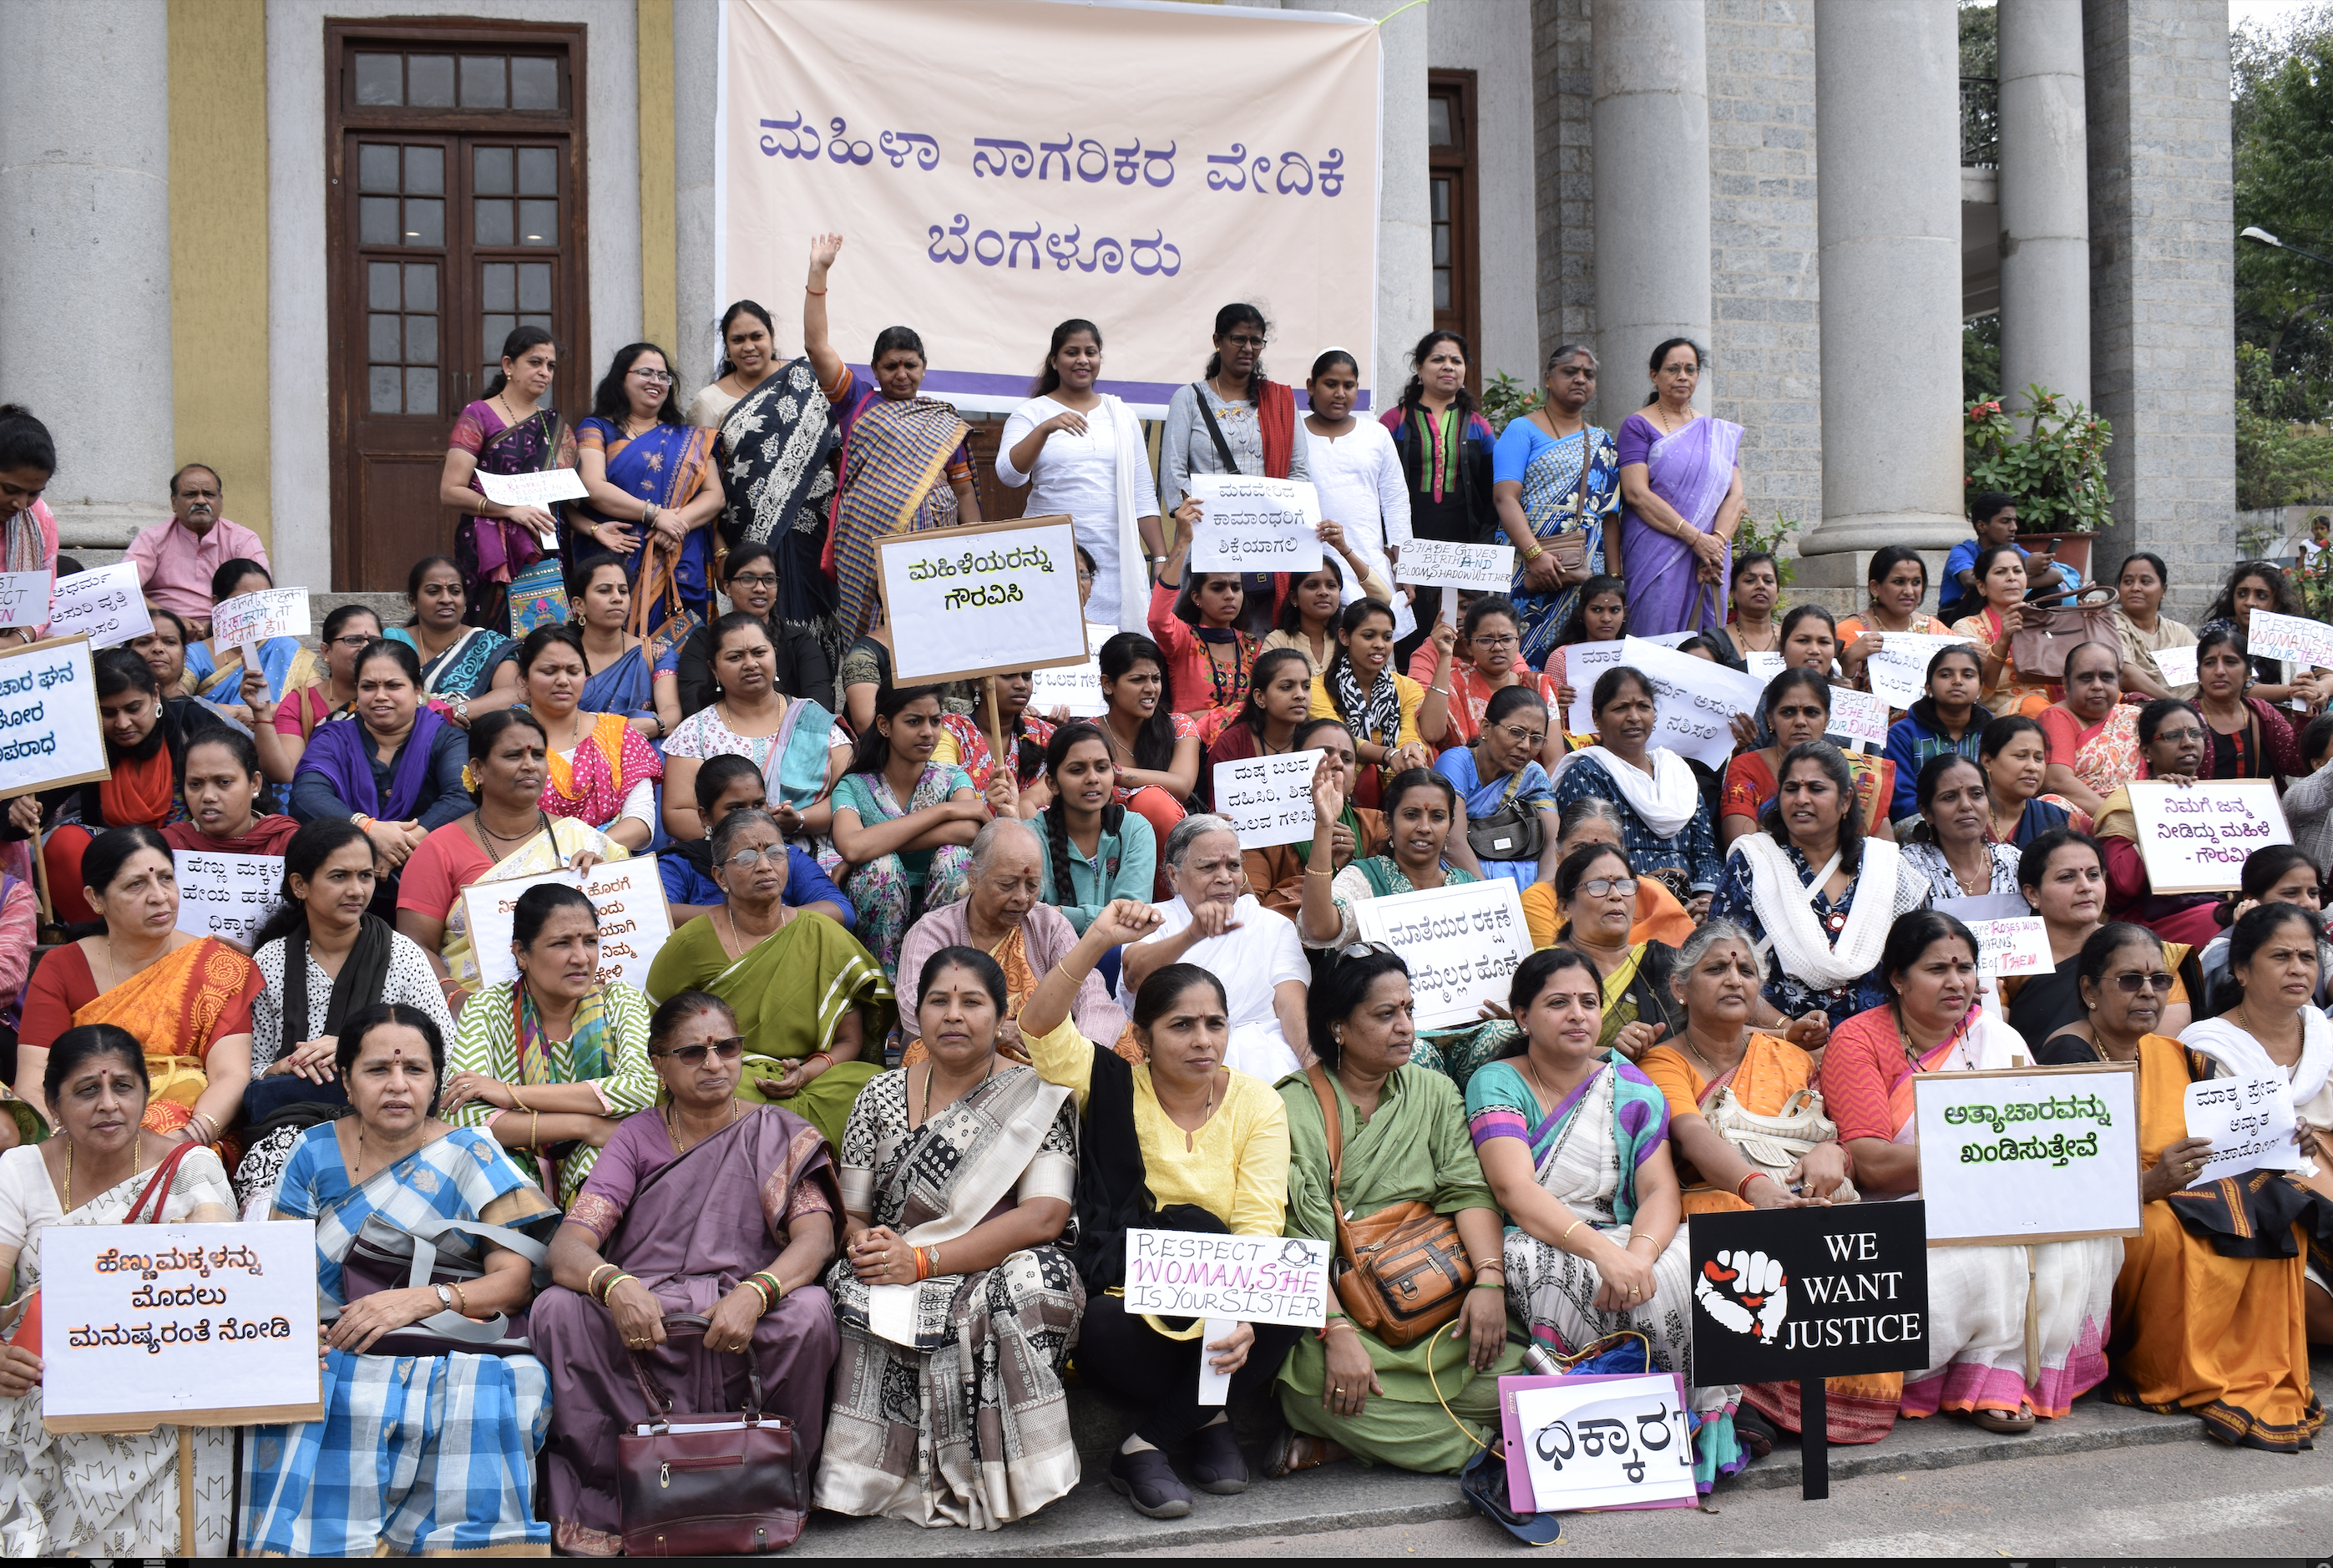 Mahila Nagarikara Vedike, Bengaluru had organised a protest, silent march, human chain from Town Hall